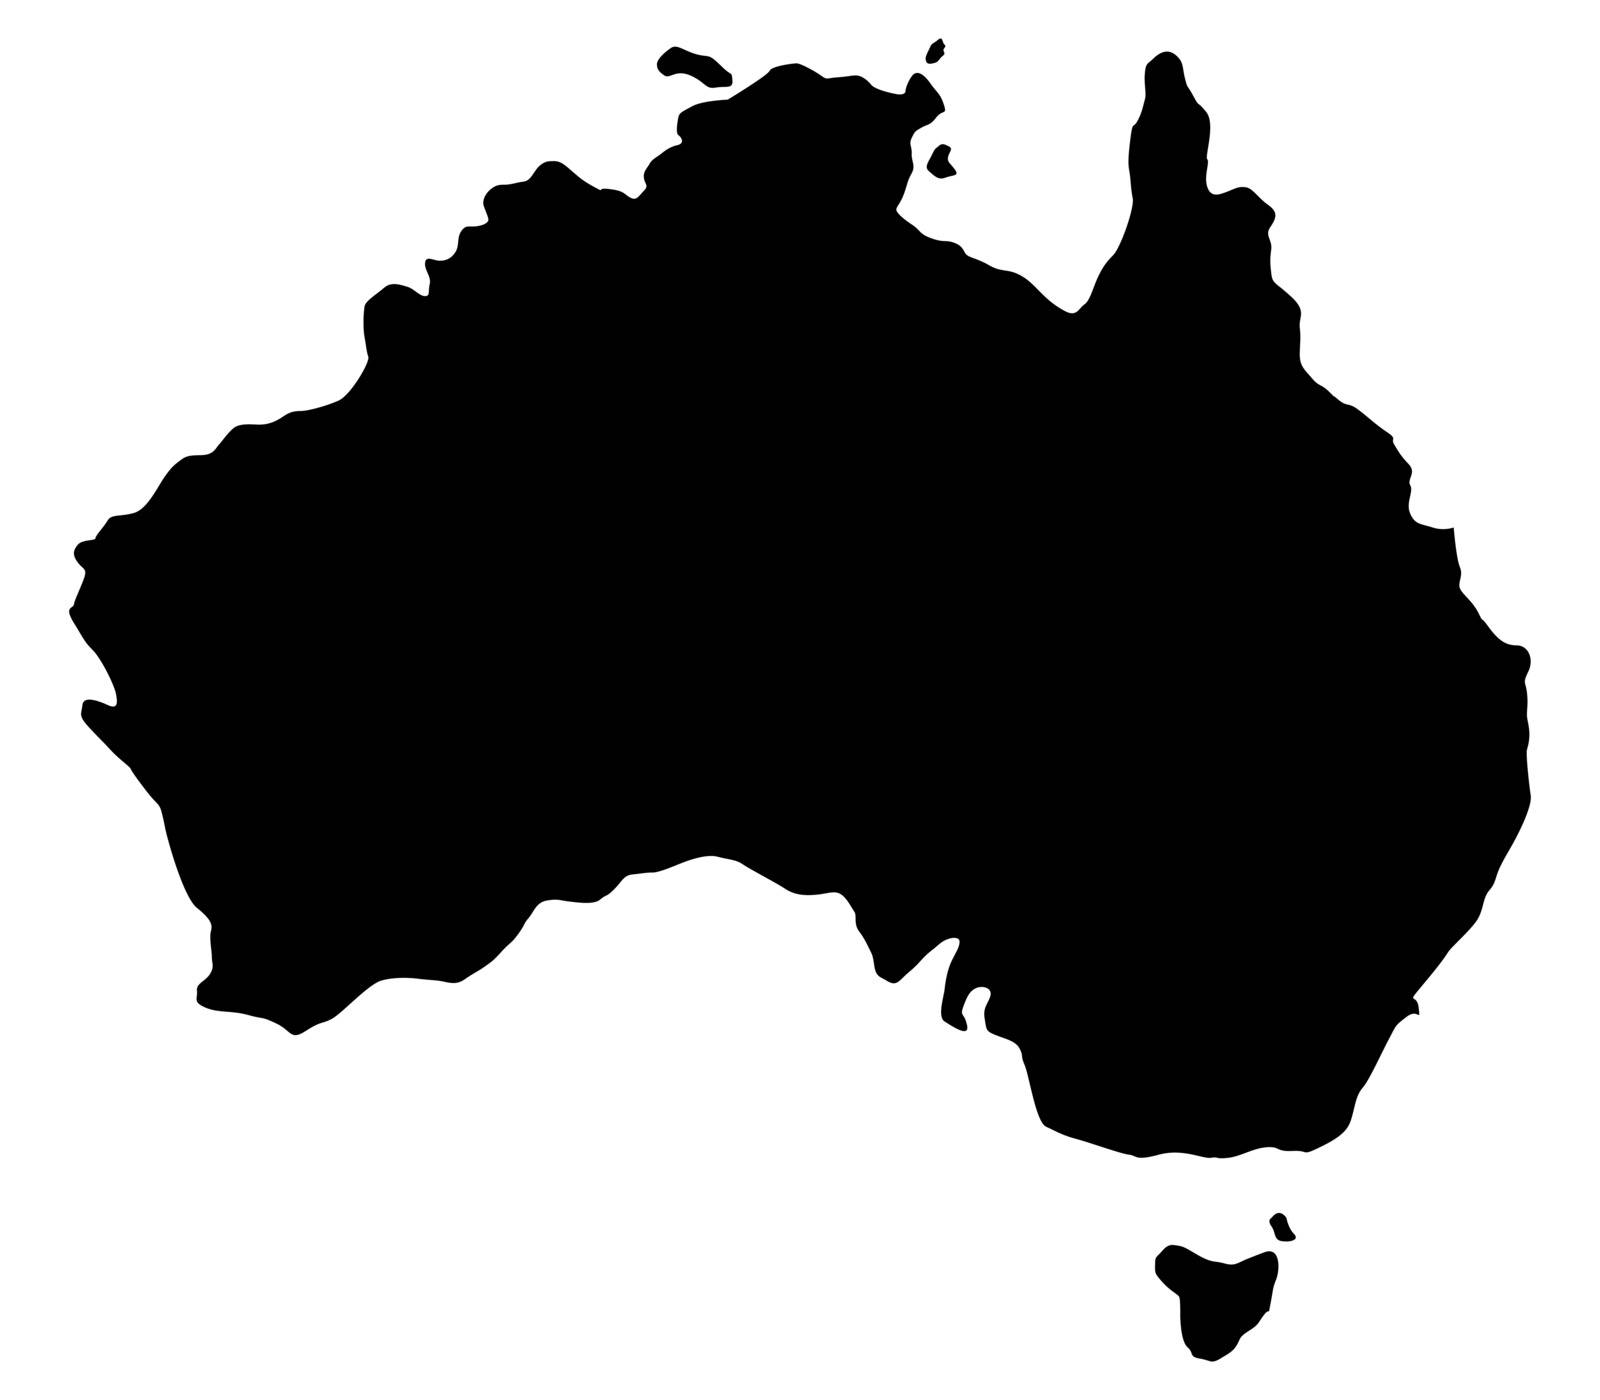 australia map by Mark1987